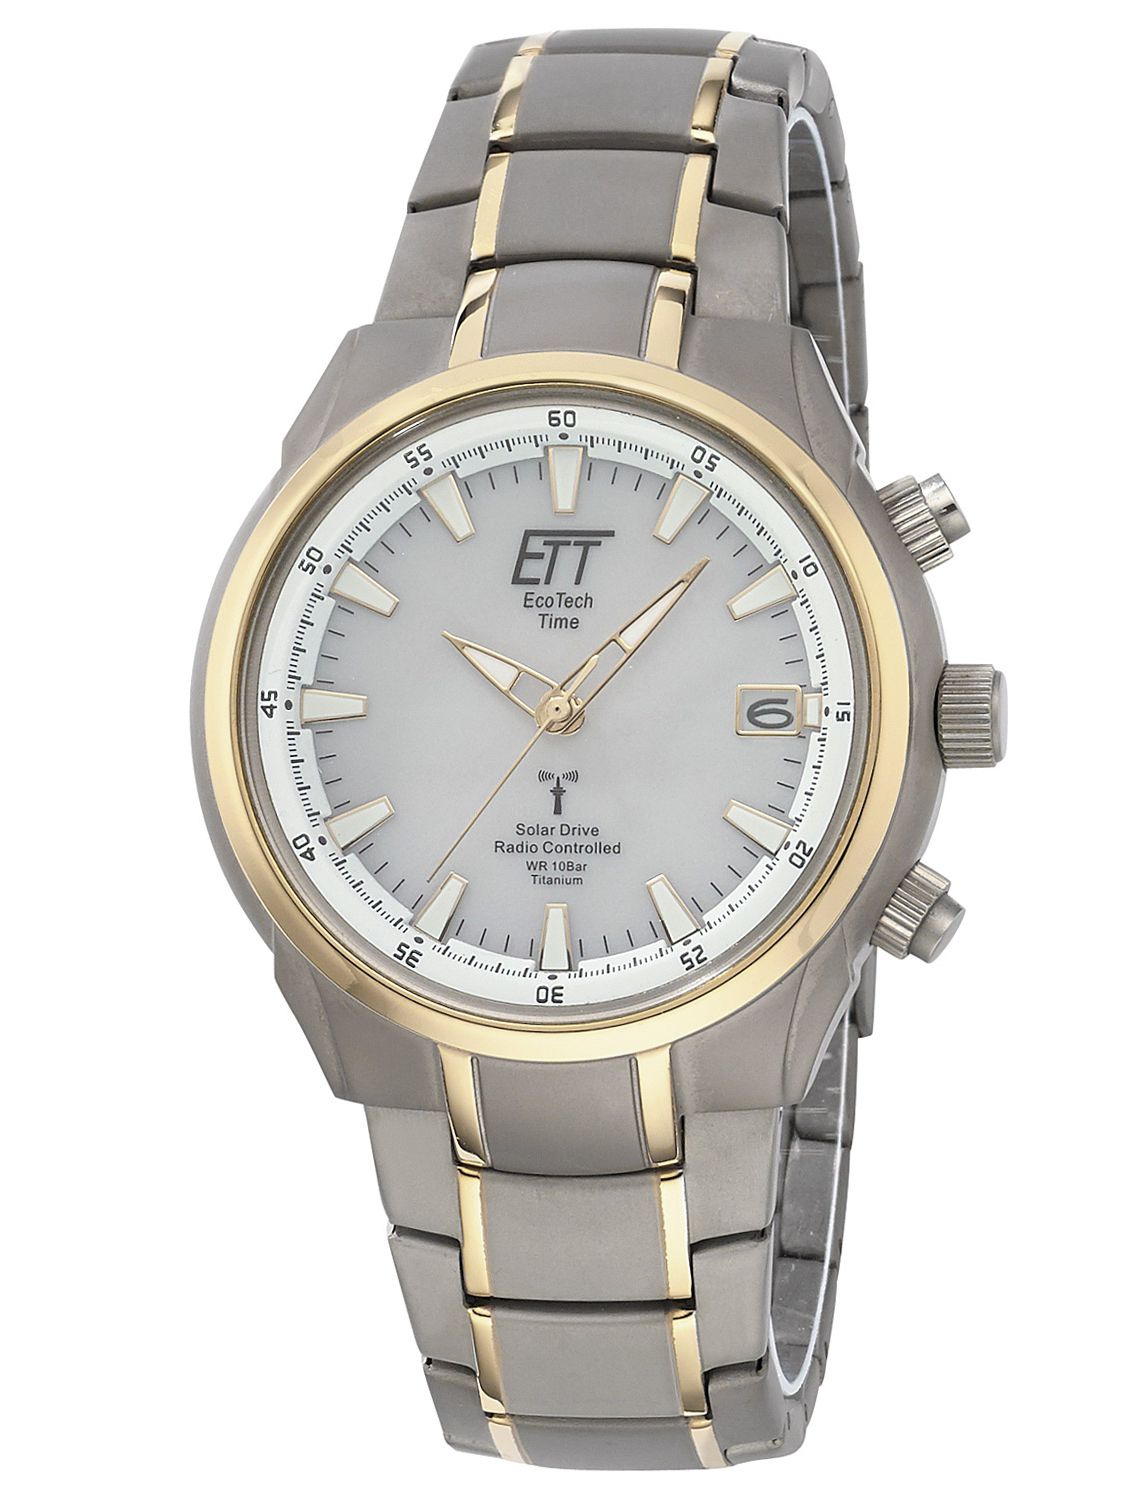 ETT Eco Tech Time • II EGT-11337-51M RC Drive Watch uhrcenter Aquanaut Solar Mens